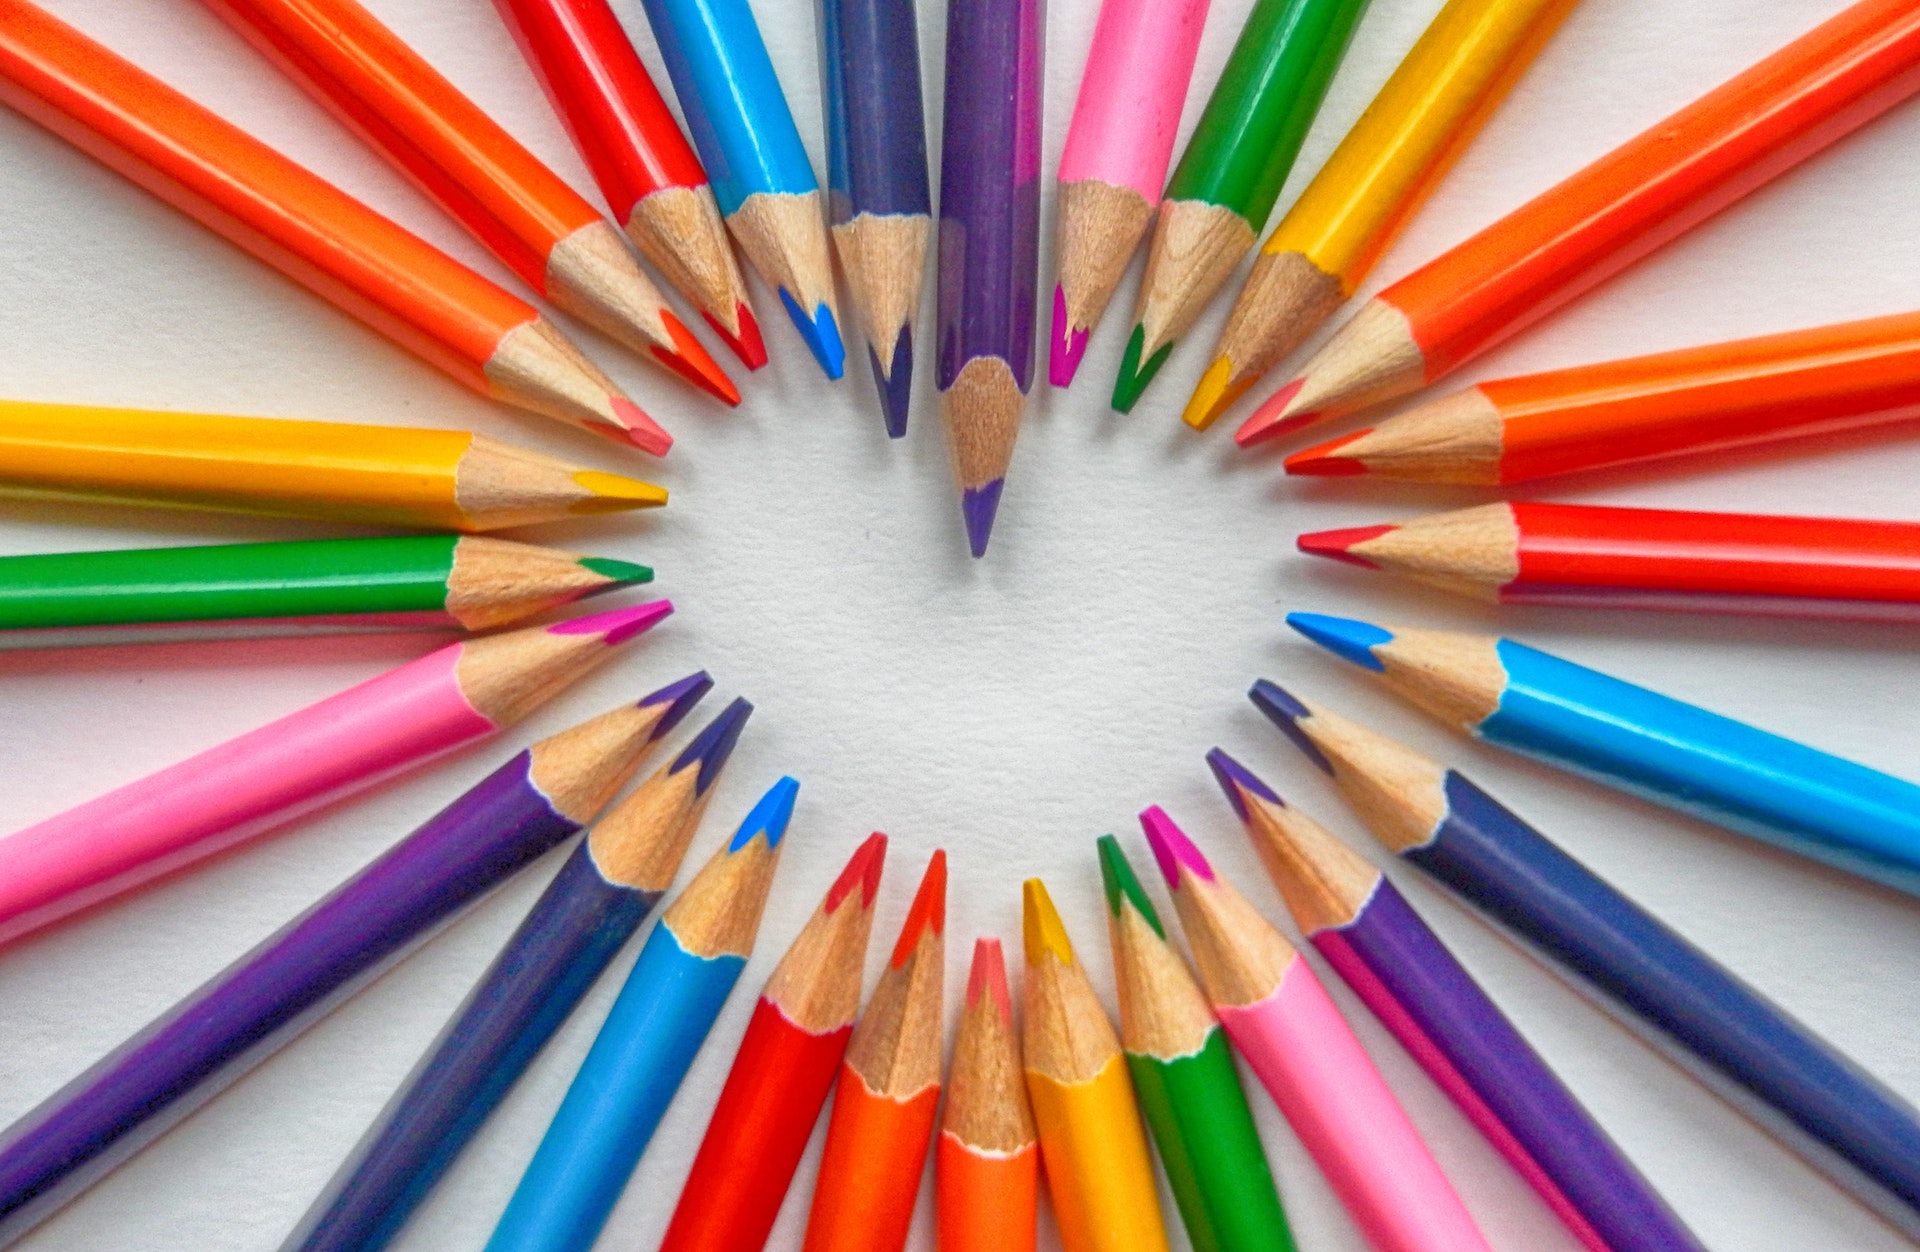 crayons representing diversity. 